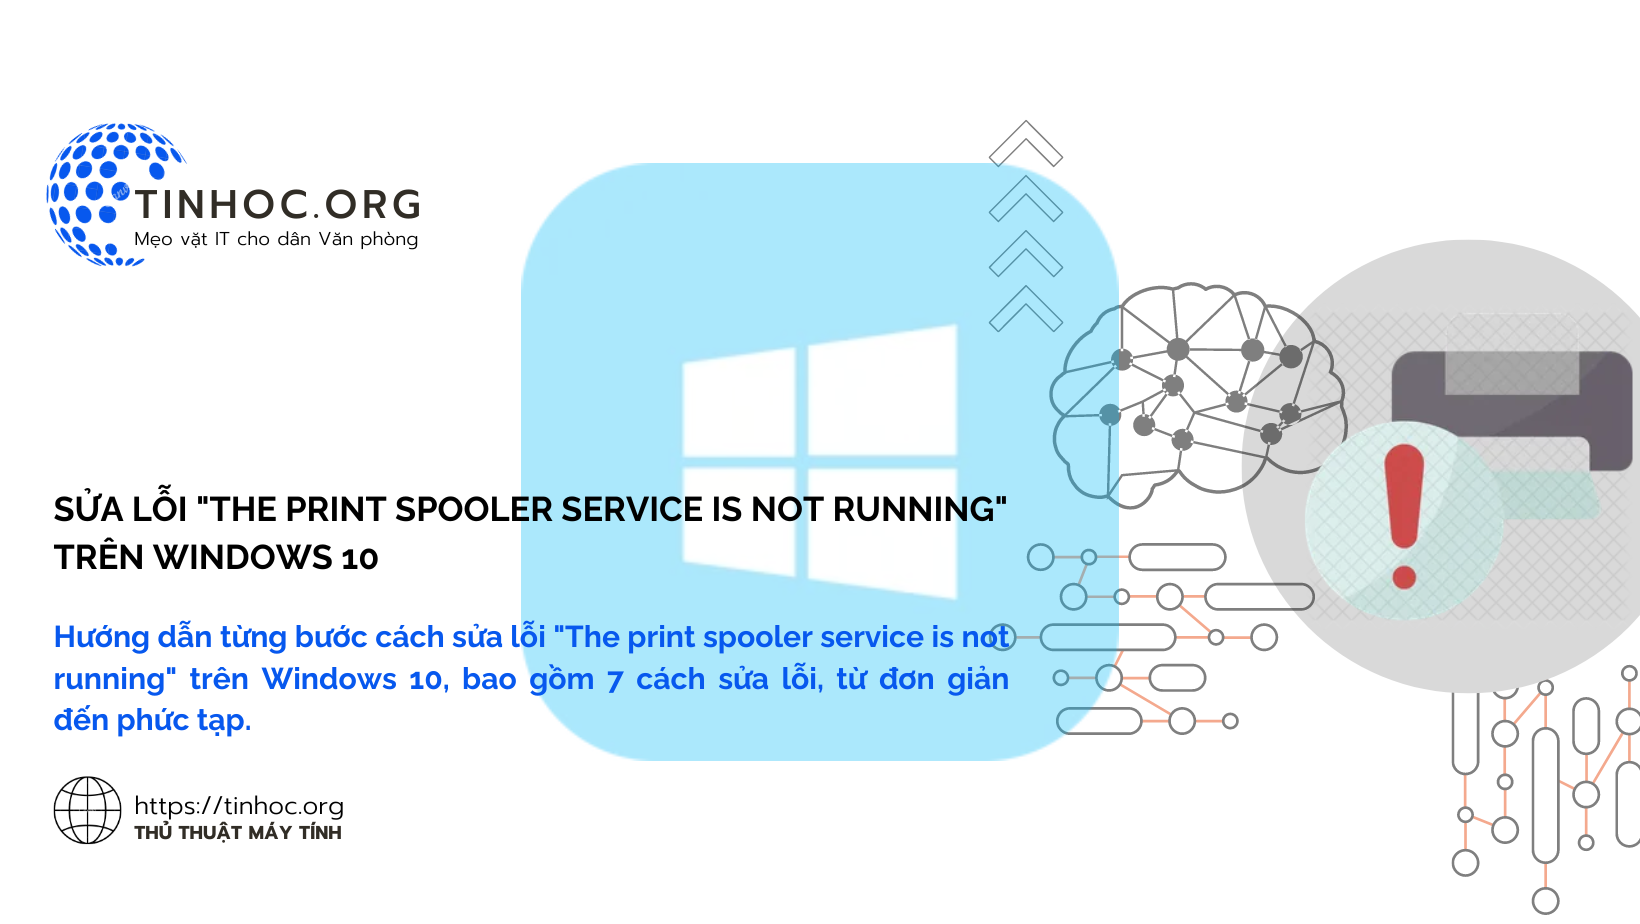 Sửa lỗi "The print spooler service is not running" trên Windows 10